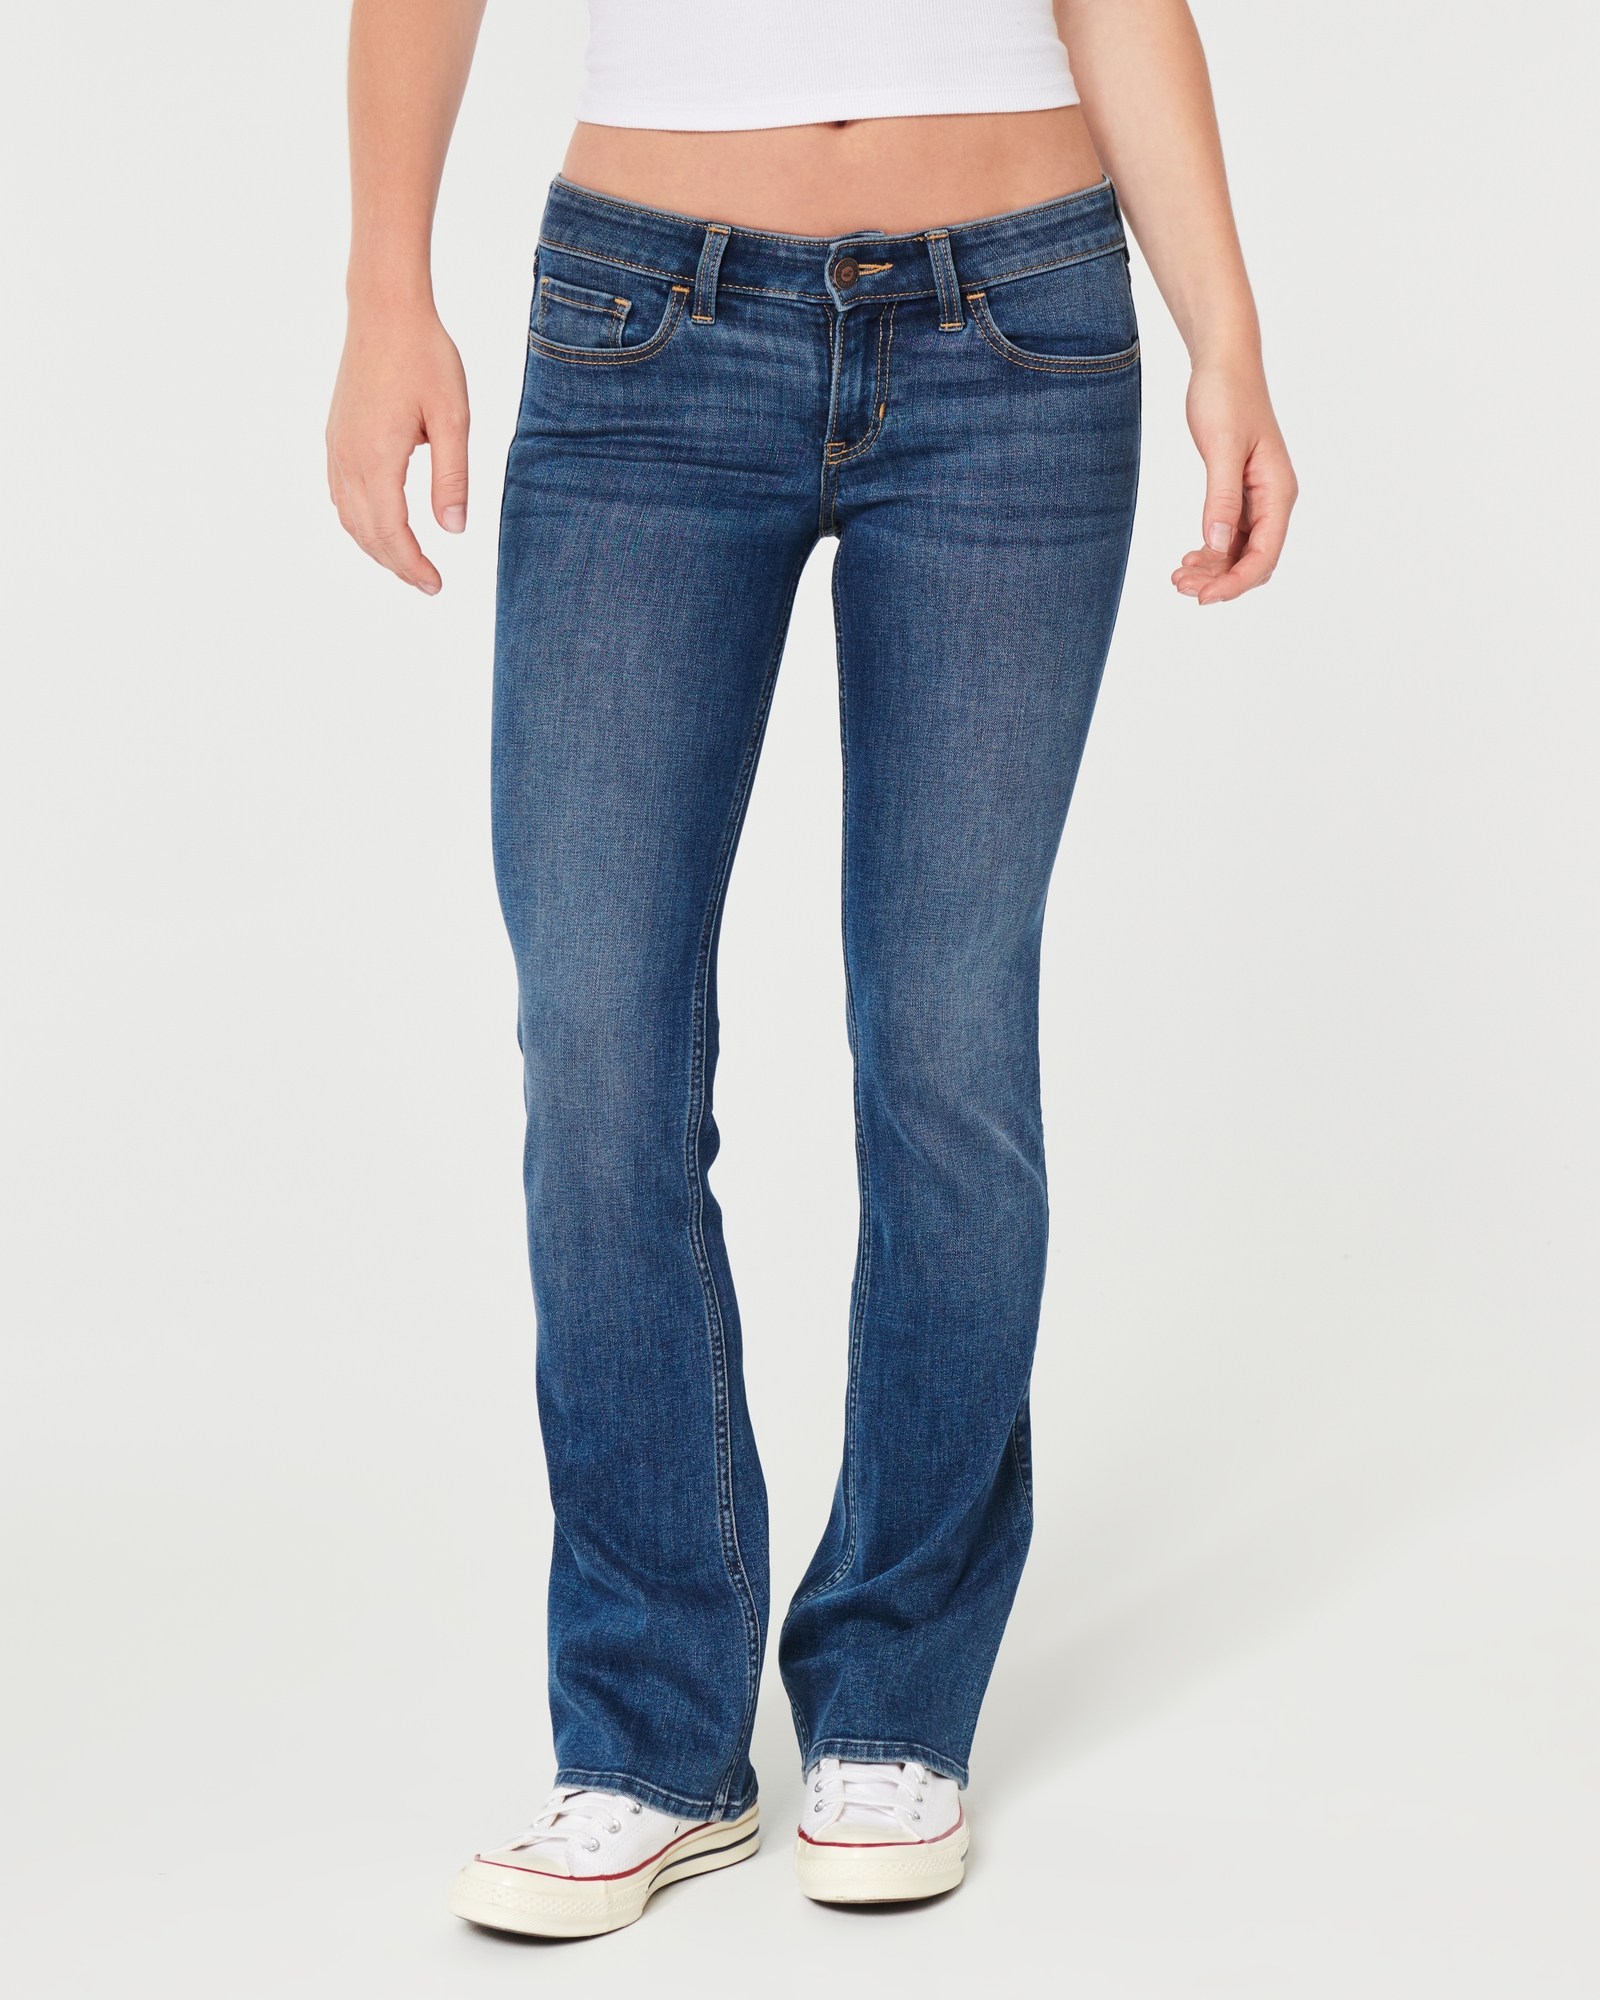 low rise jeans era w/ @Hollister Co. ⭐️ #hcopartner #hcoinsider #holli, Jeans